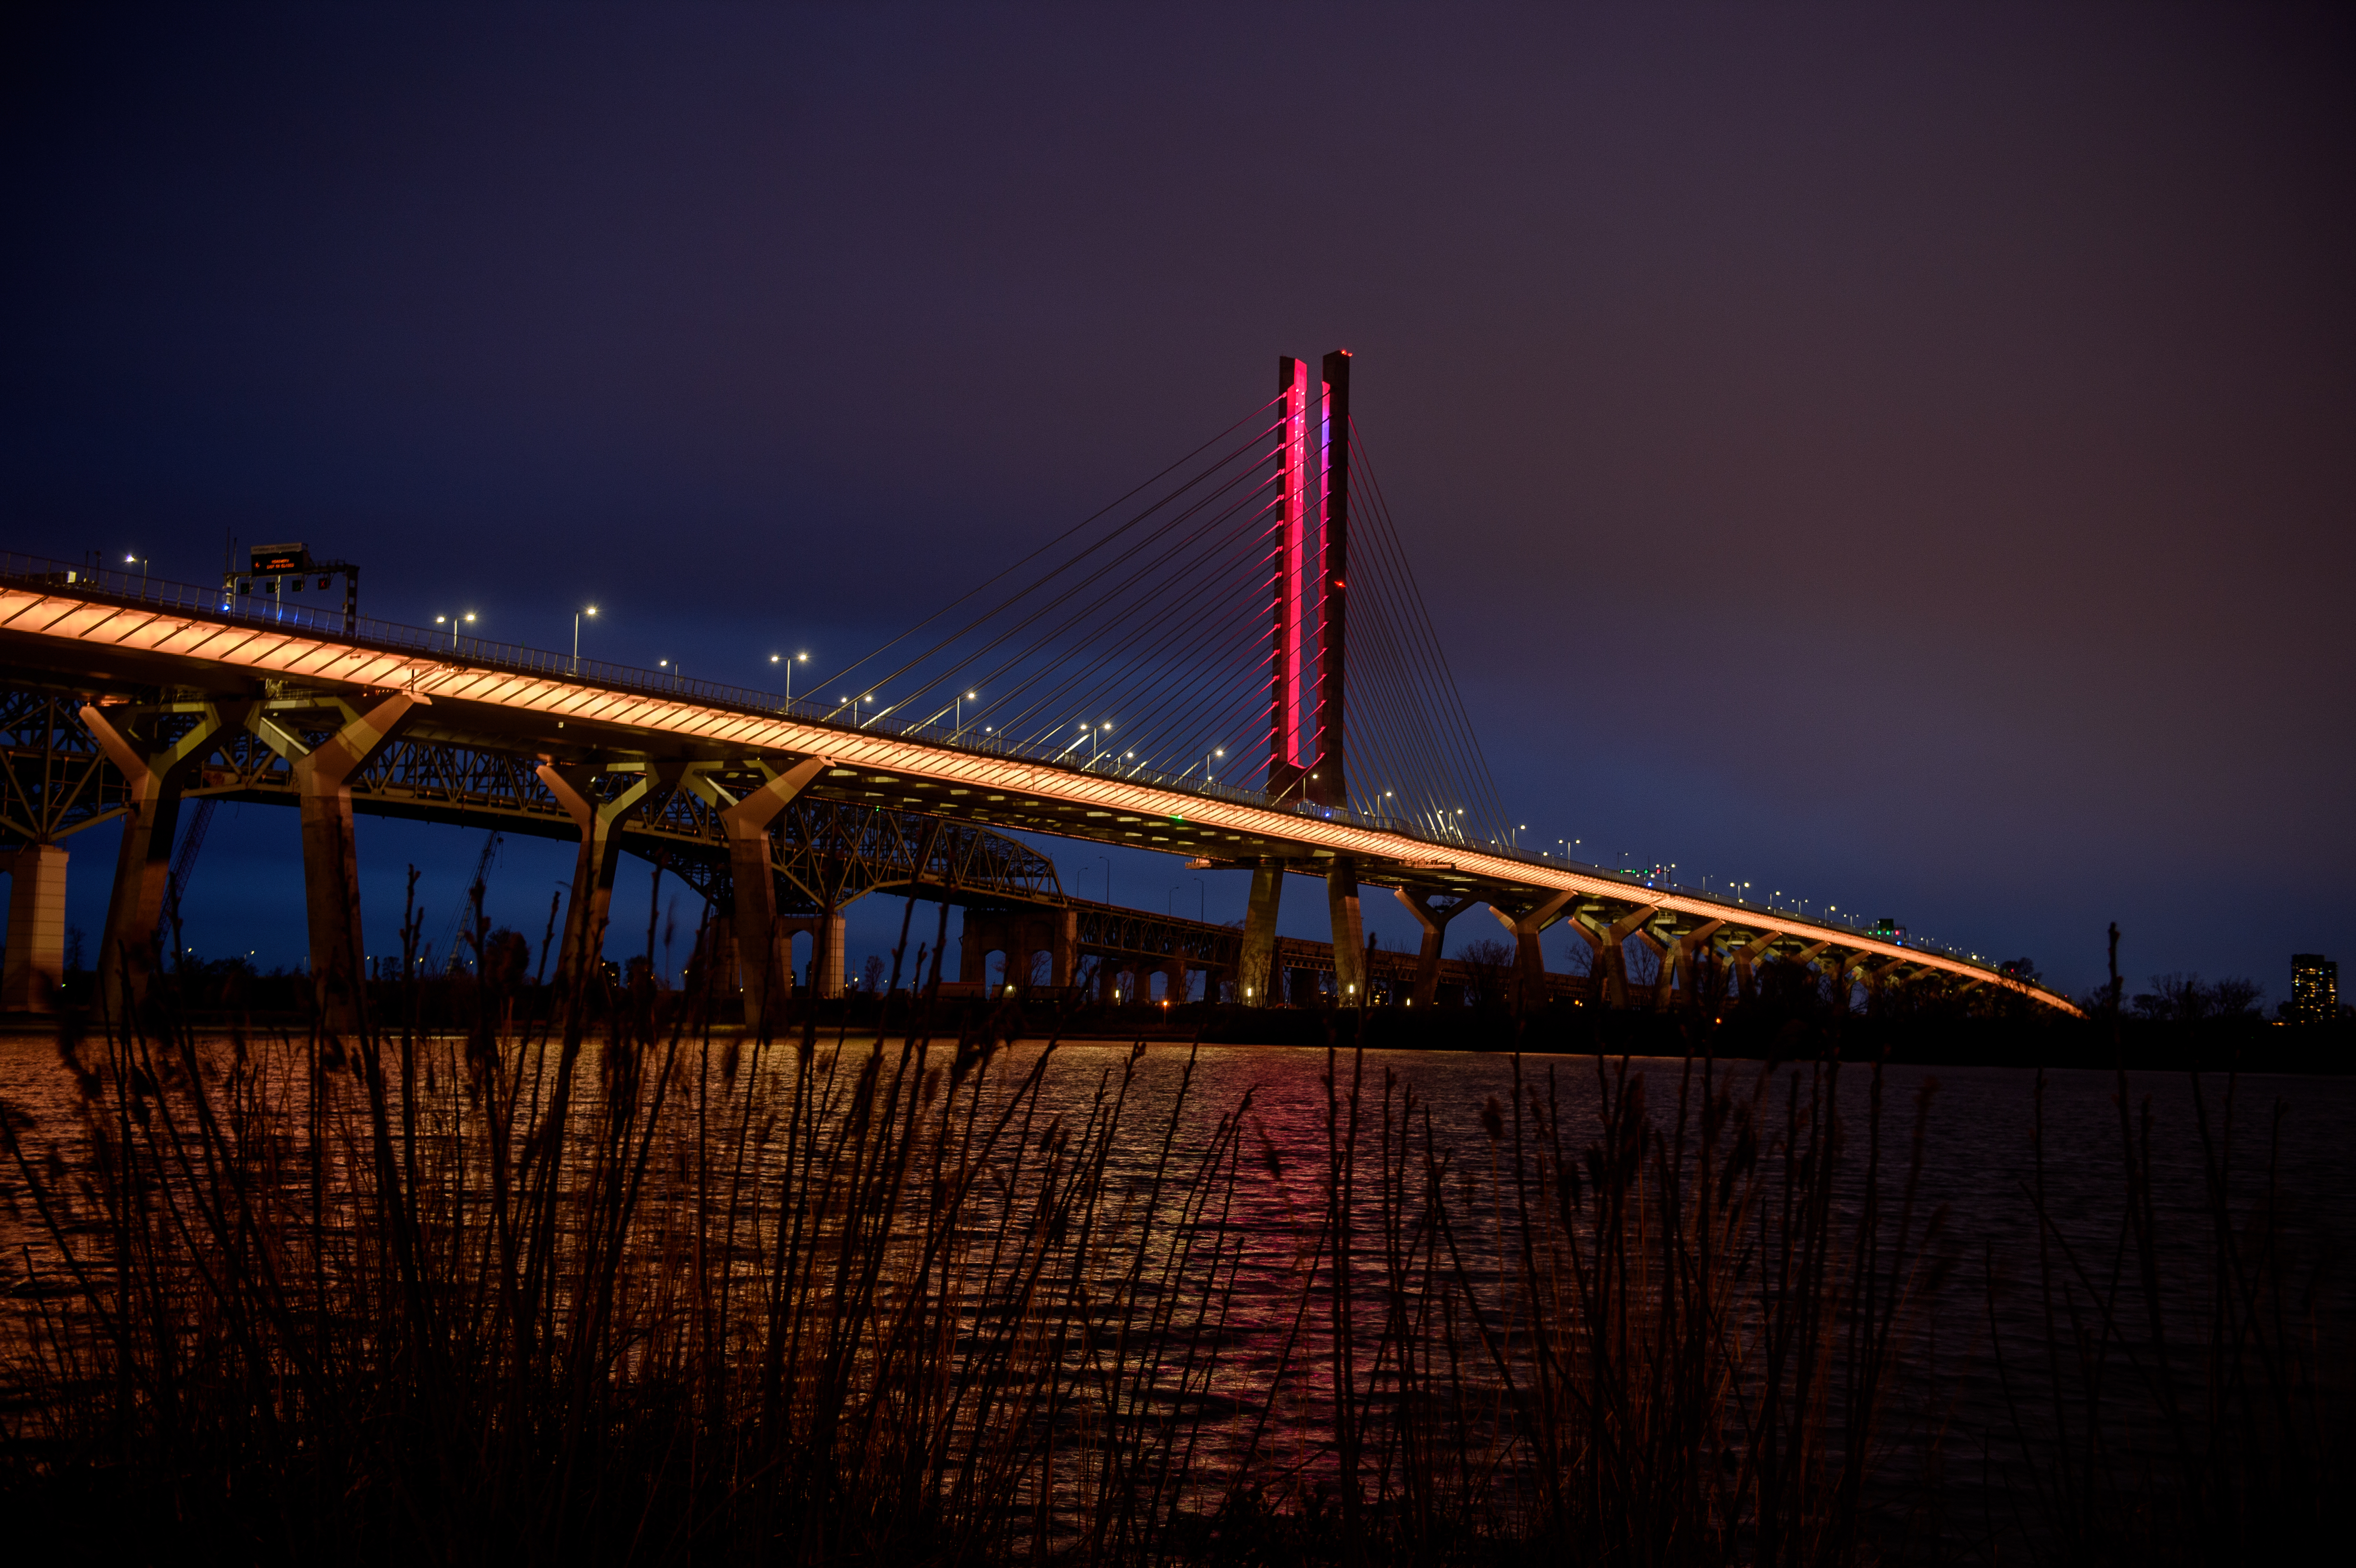 Samuel de Champlain Bridge illumination for Asian Heritage month, May 7, 2021